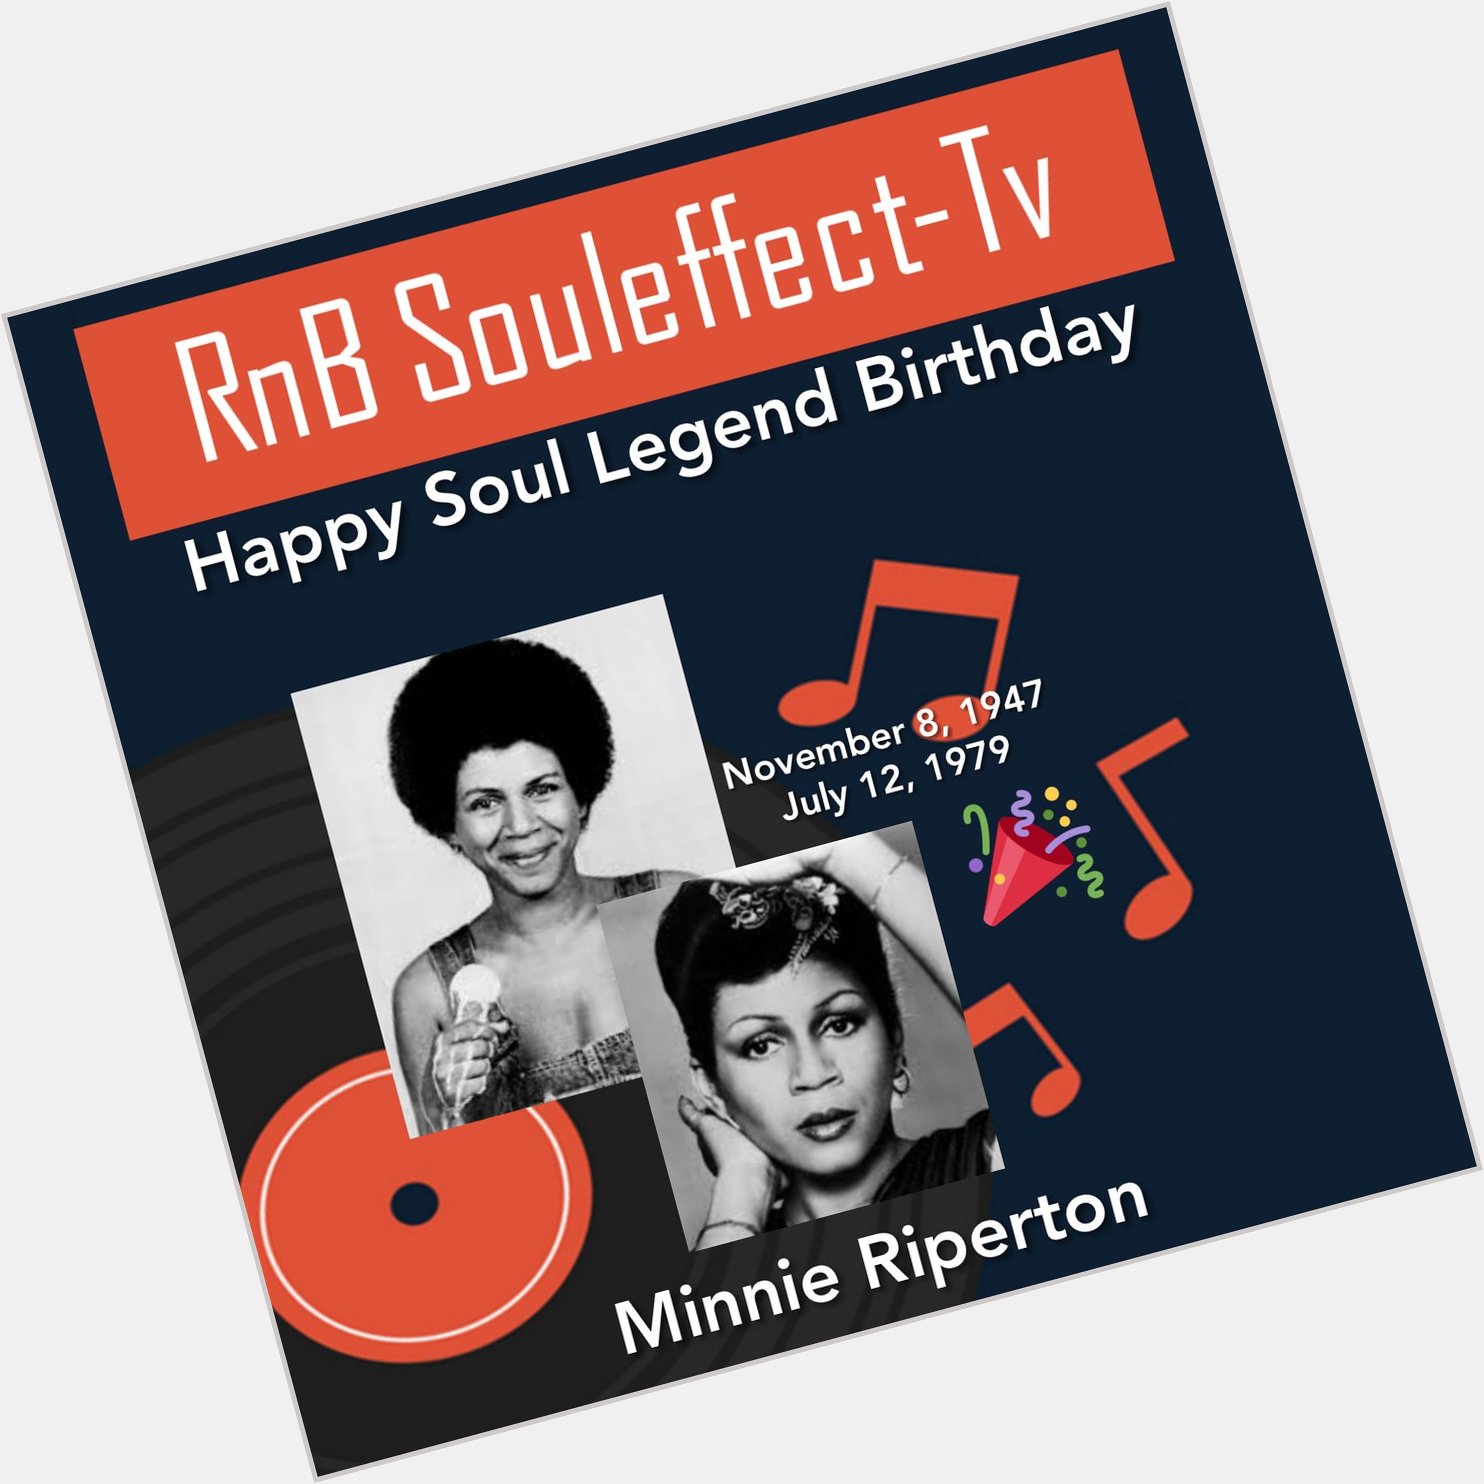 Happy Soul Legend Birthday Minnie Riperton 